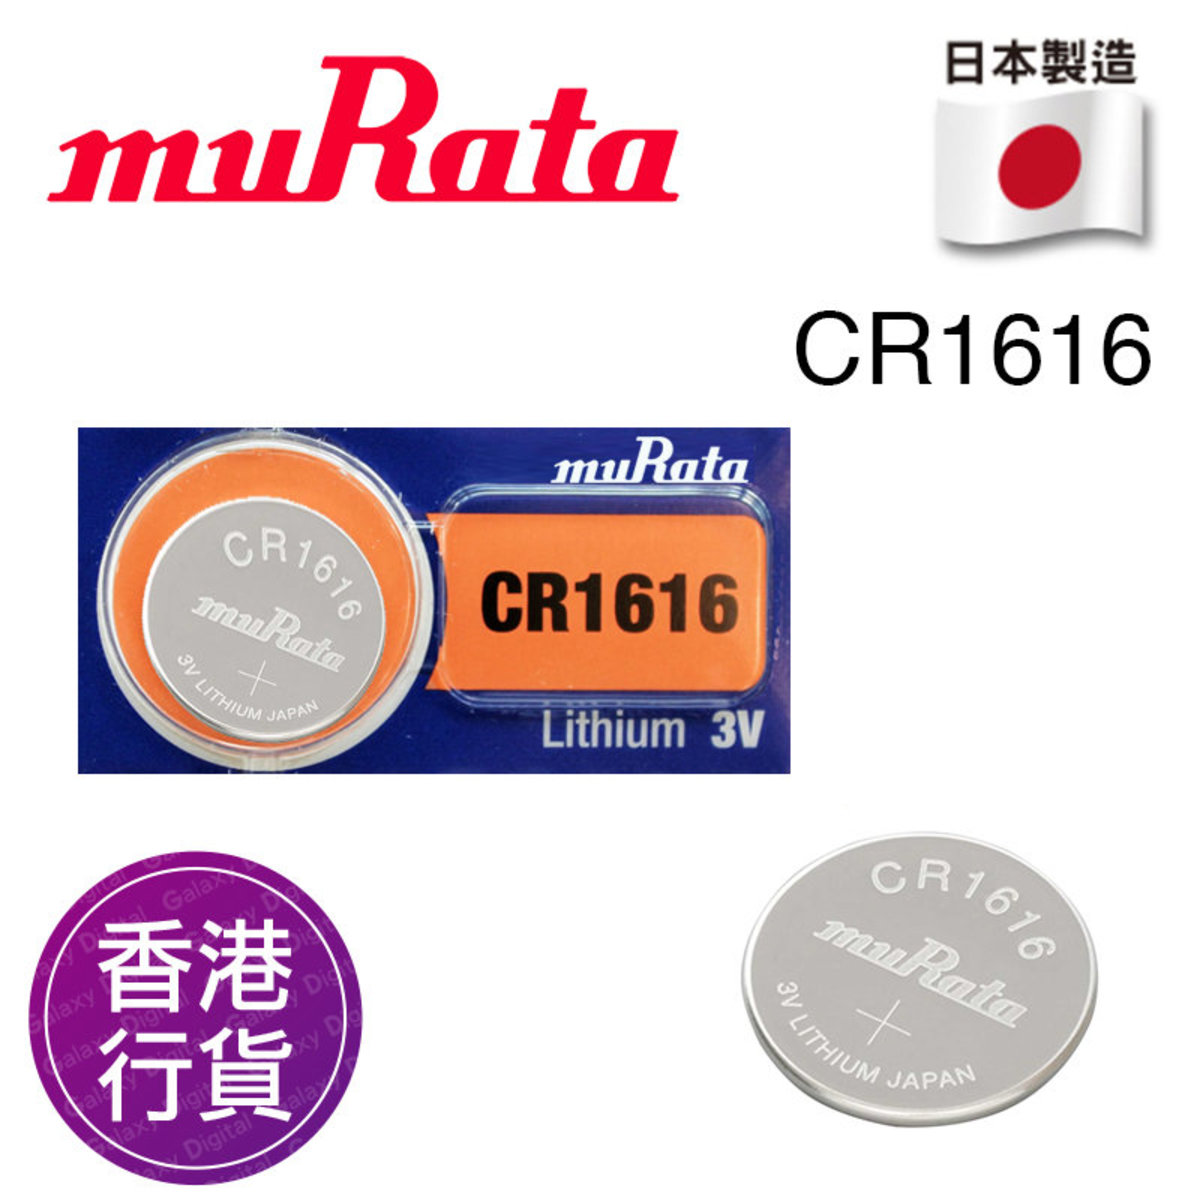 Murata CR1616 Battery (100 Pieces) –